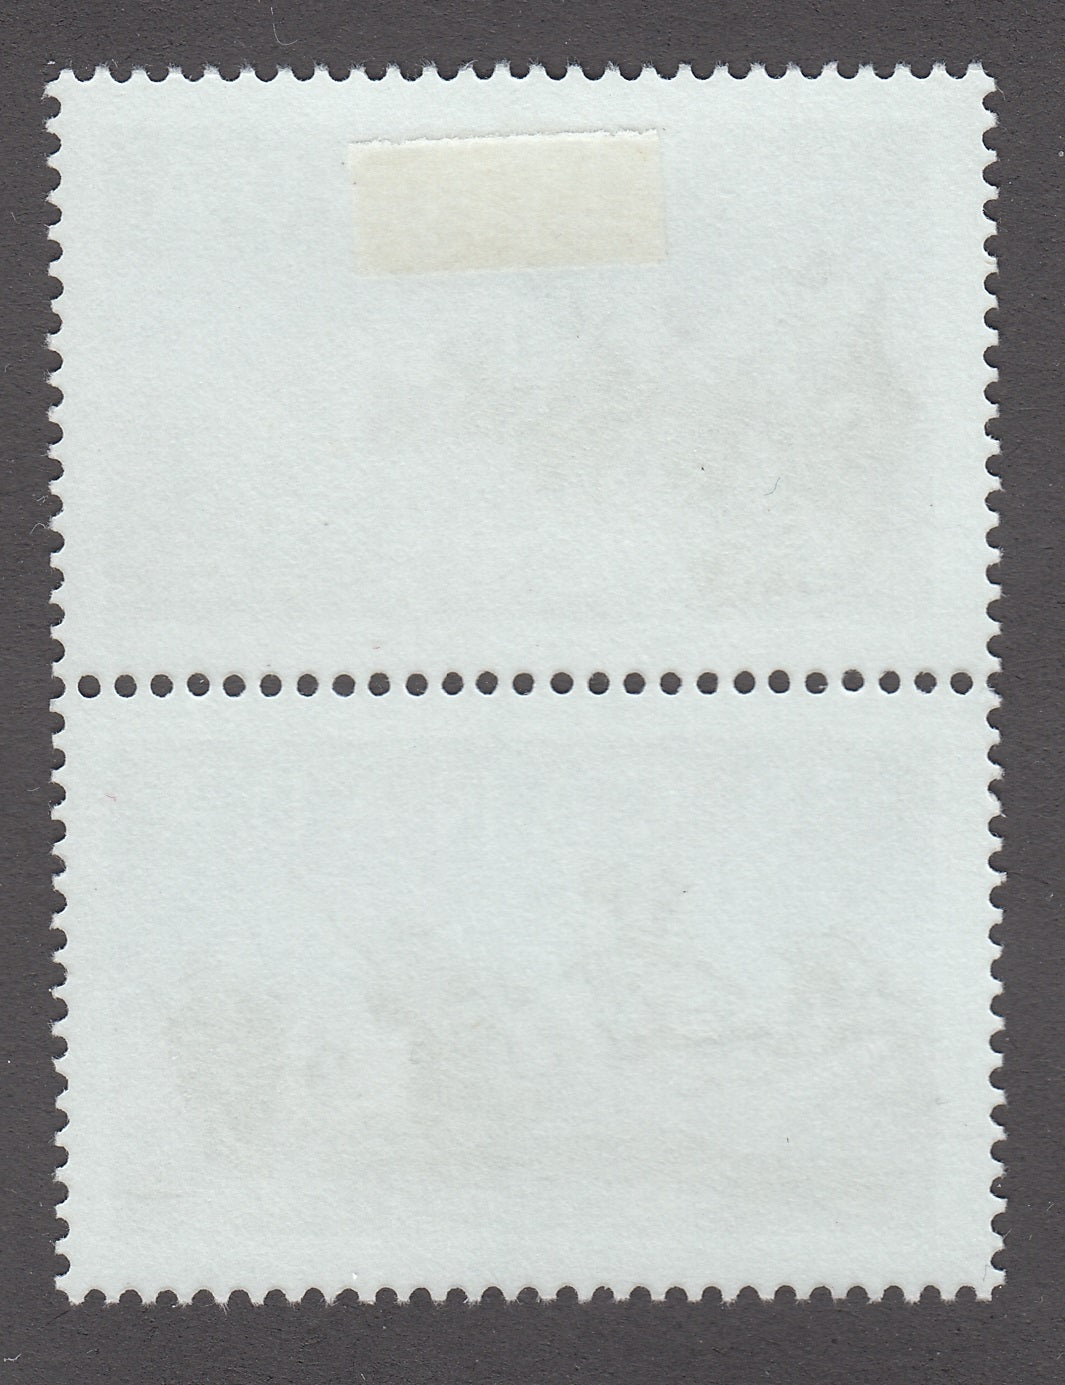 1249CA1802 - Canada #1249, 1250 - Mint Pair, Printing Variety